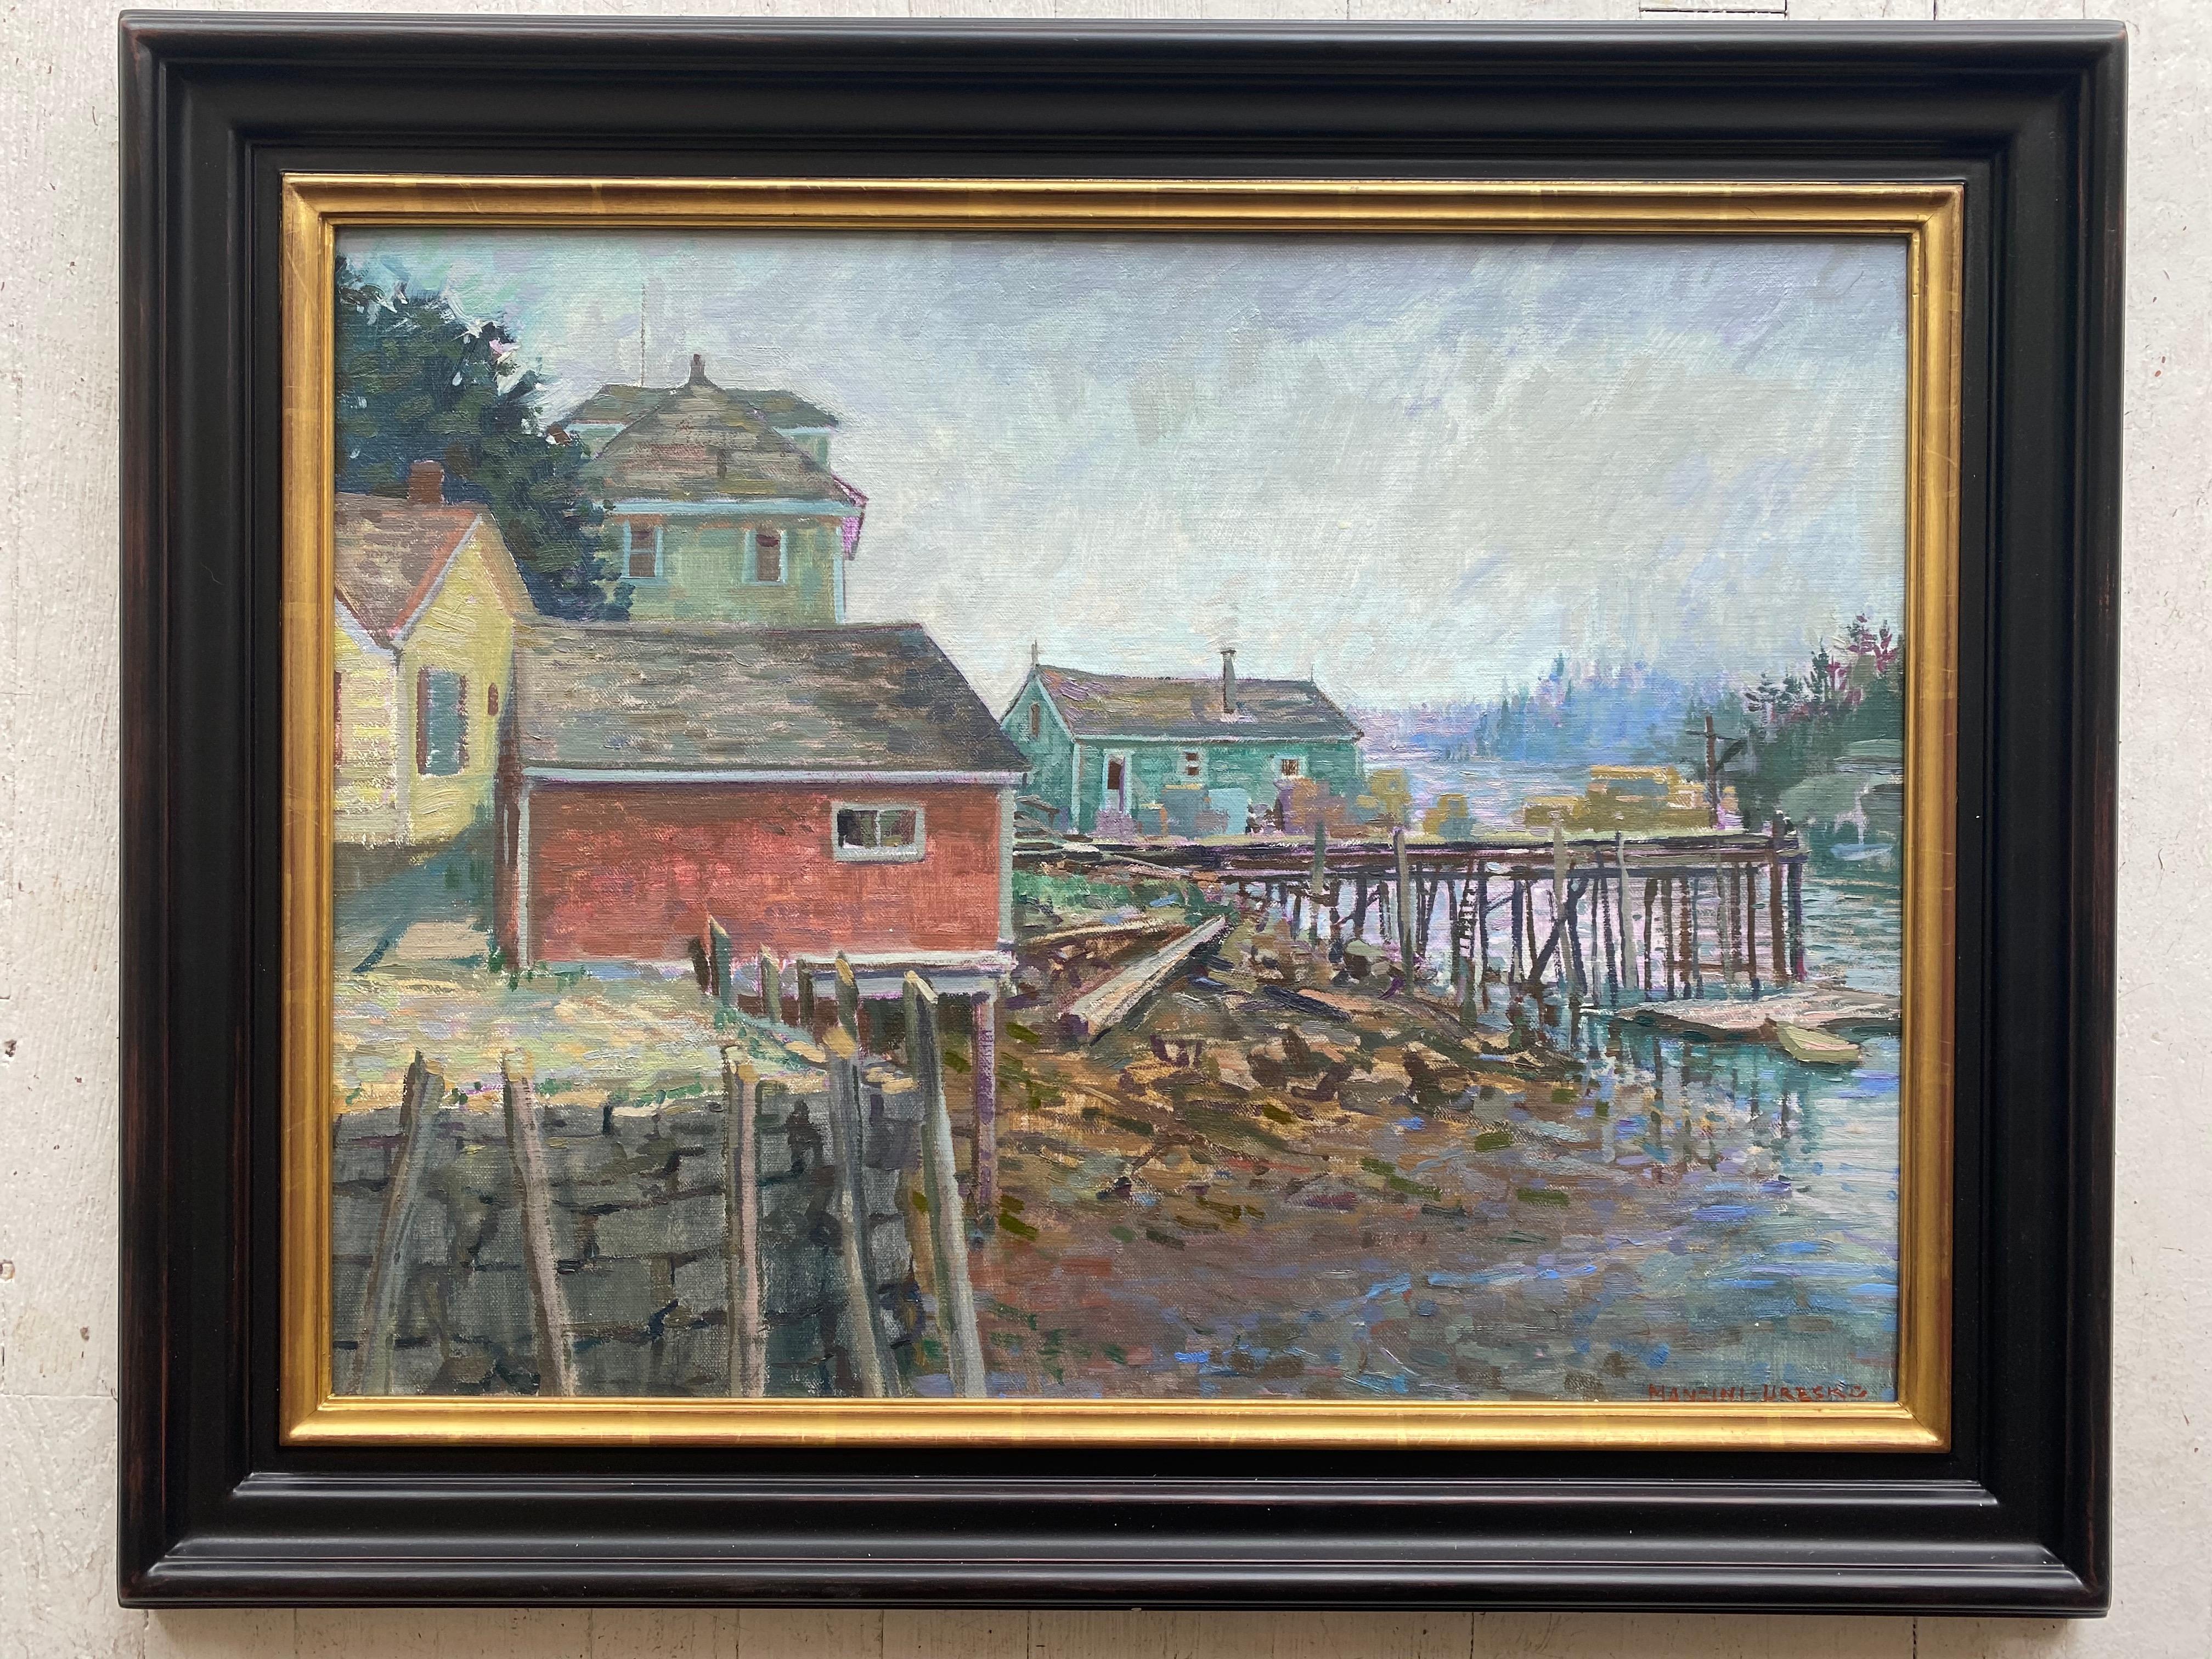 Andy's Wharf, Stonington - Painting by Leo Mancini-Hresko